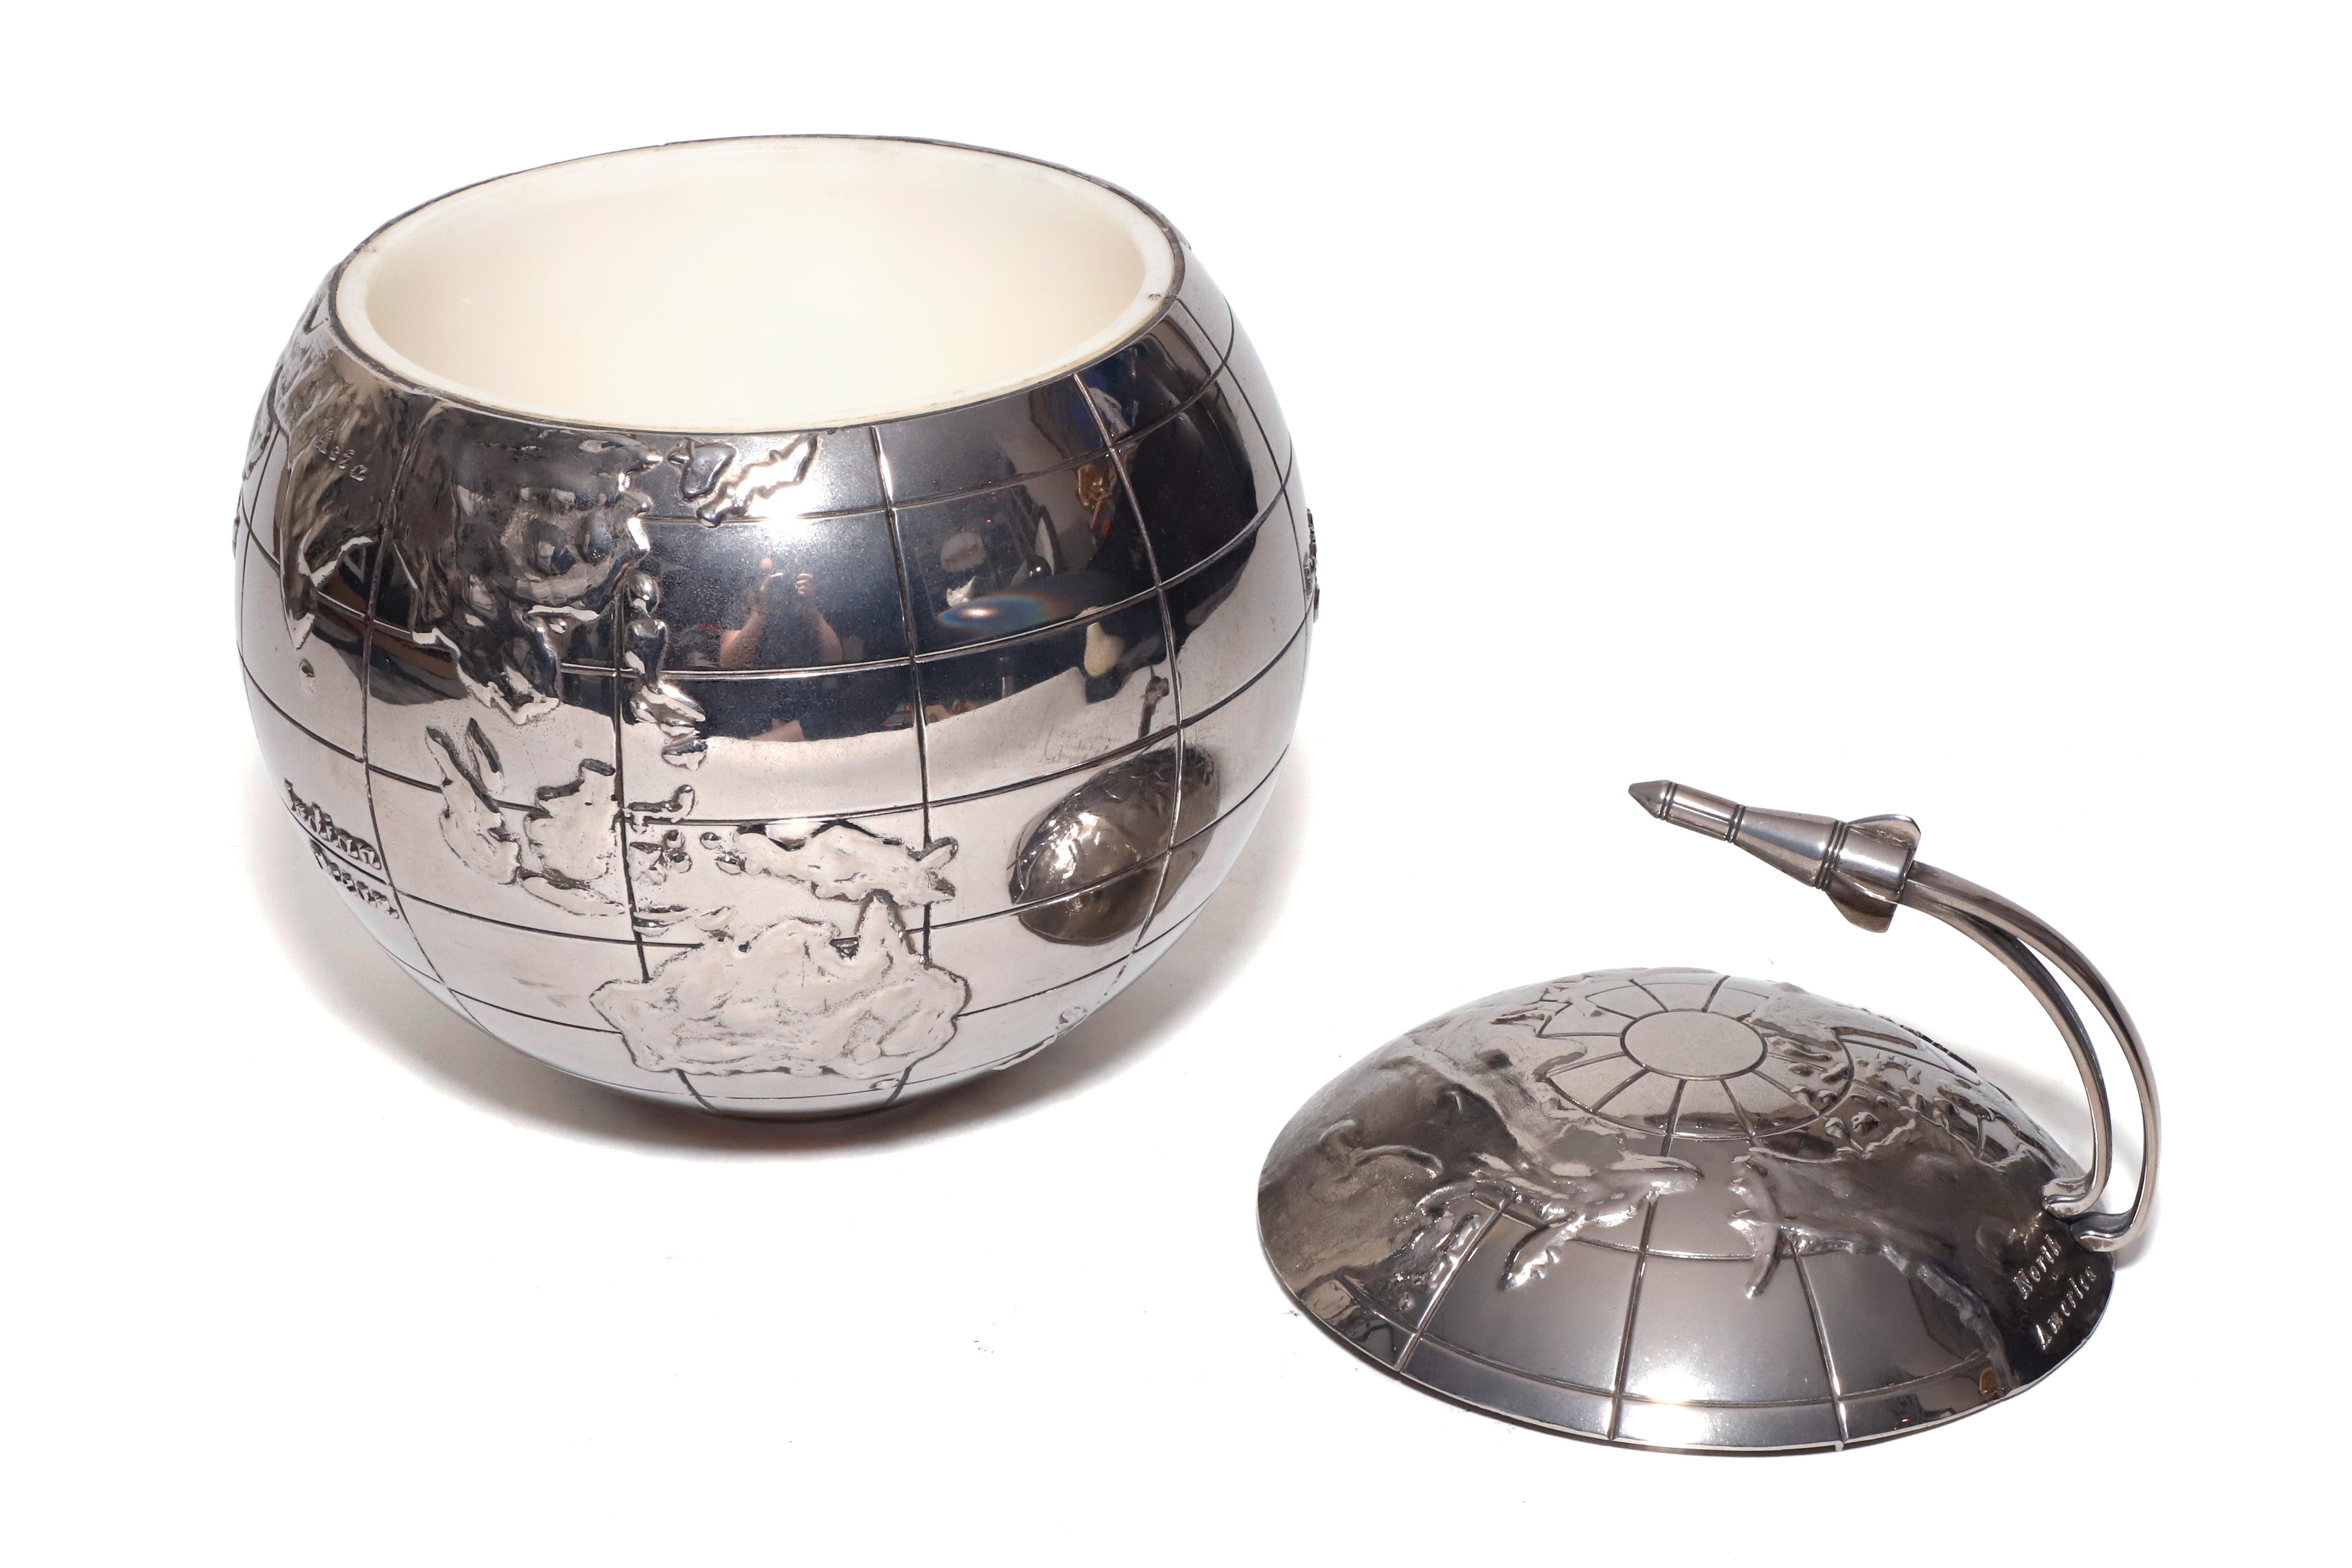 American Art Deco International Silver Co. Globe Ice Bucket Cooler For Sale